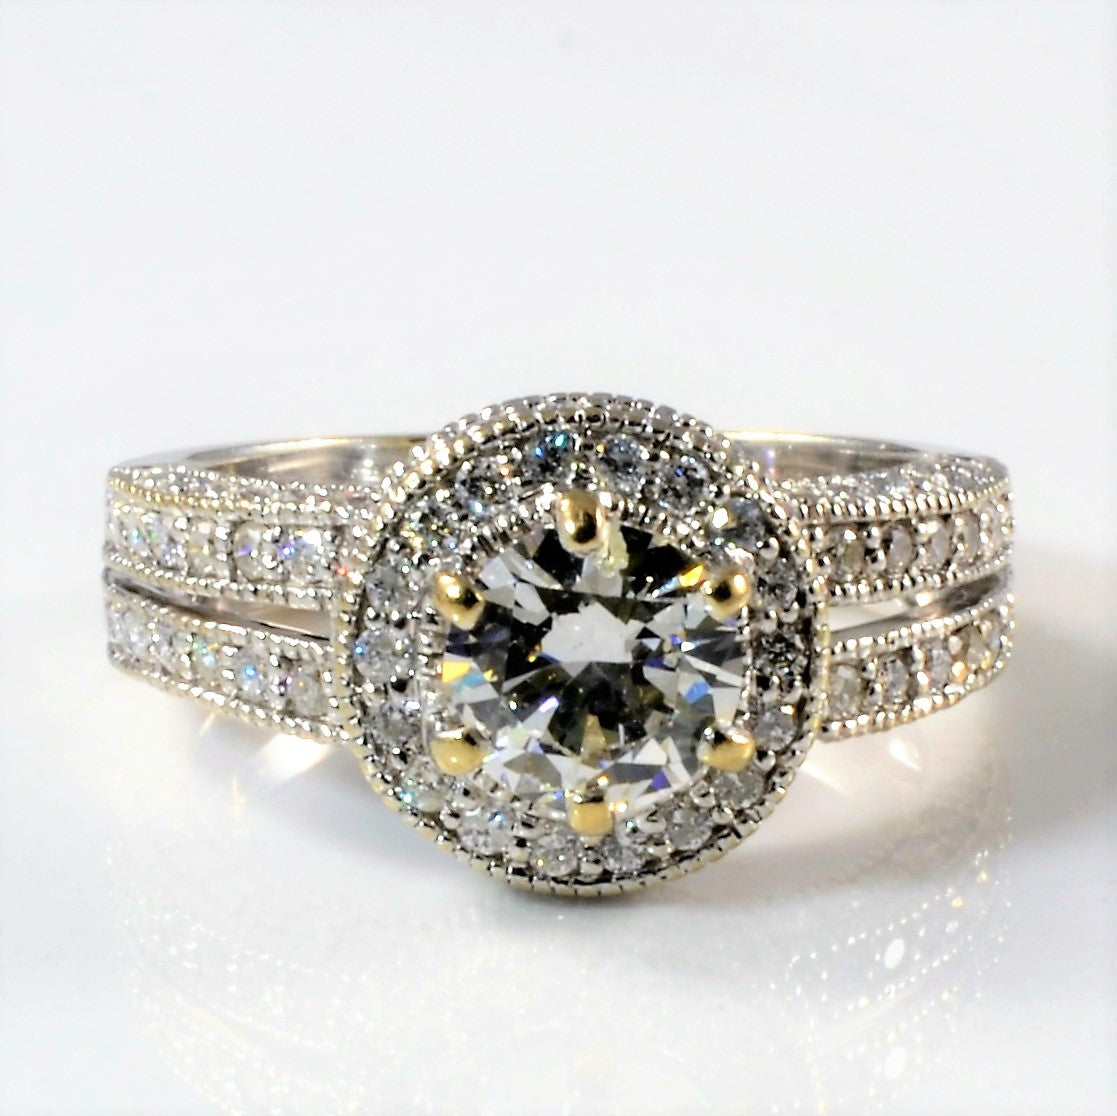 Brilliant cut diamond ring for sale in Canada, diamond engagement ring for sale, diamond engagement ring